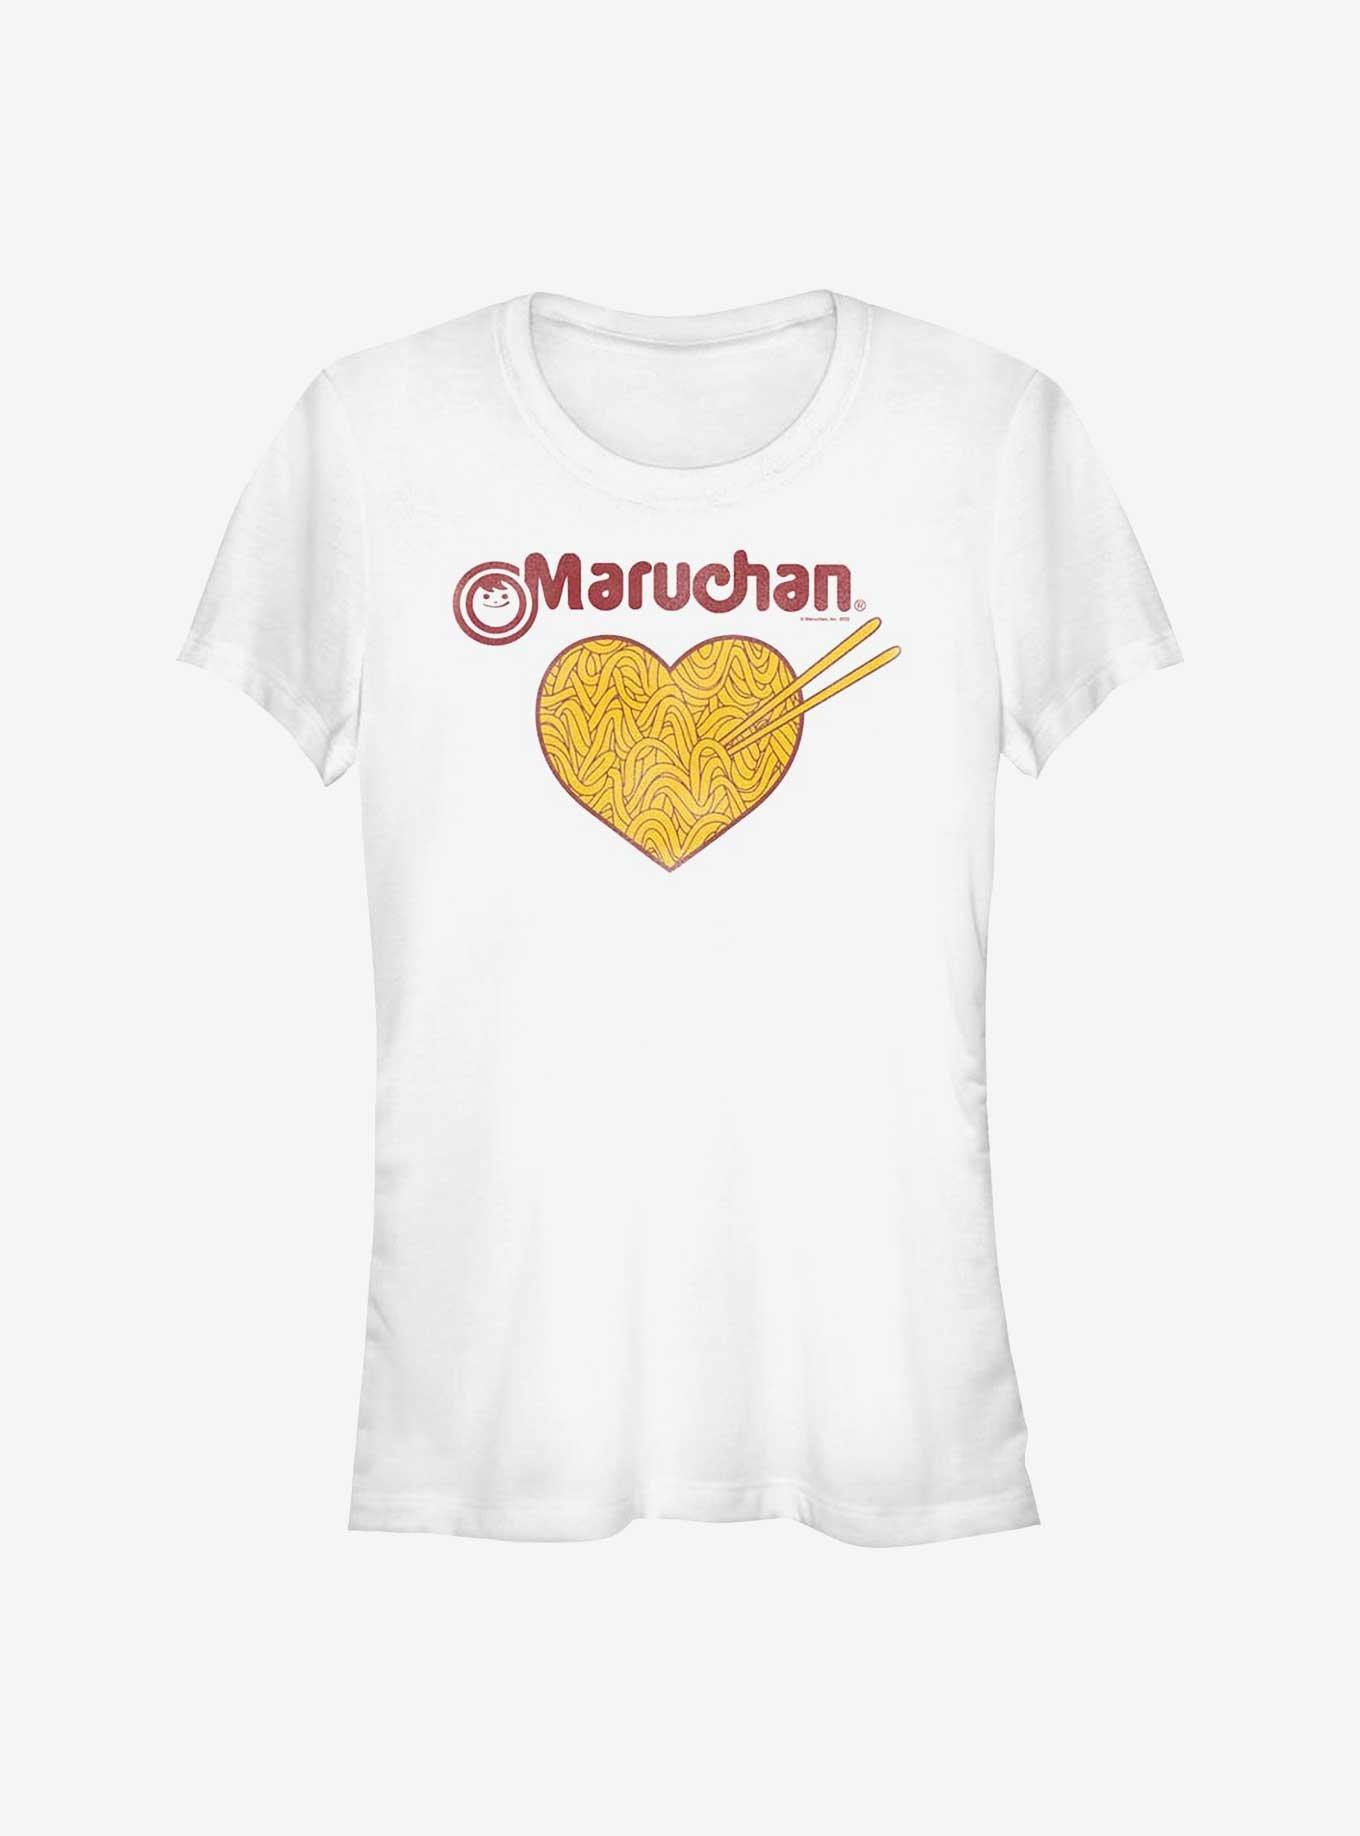 Maruchan Noodles Heart Girls T-Shirt, , hi-res